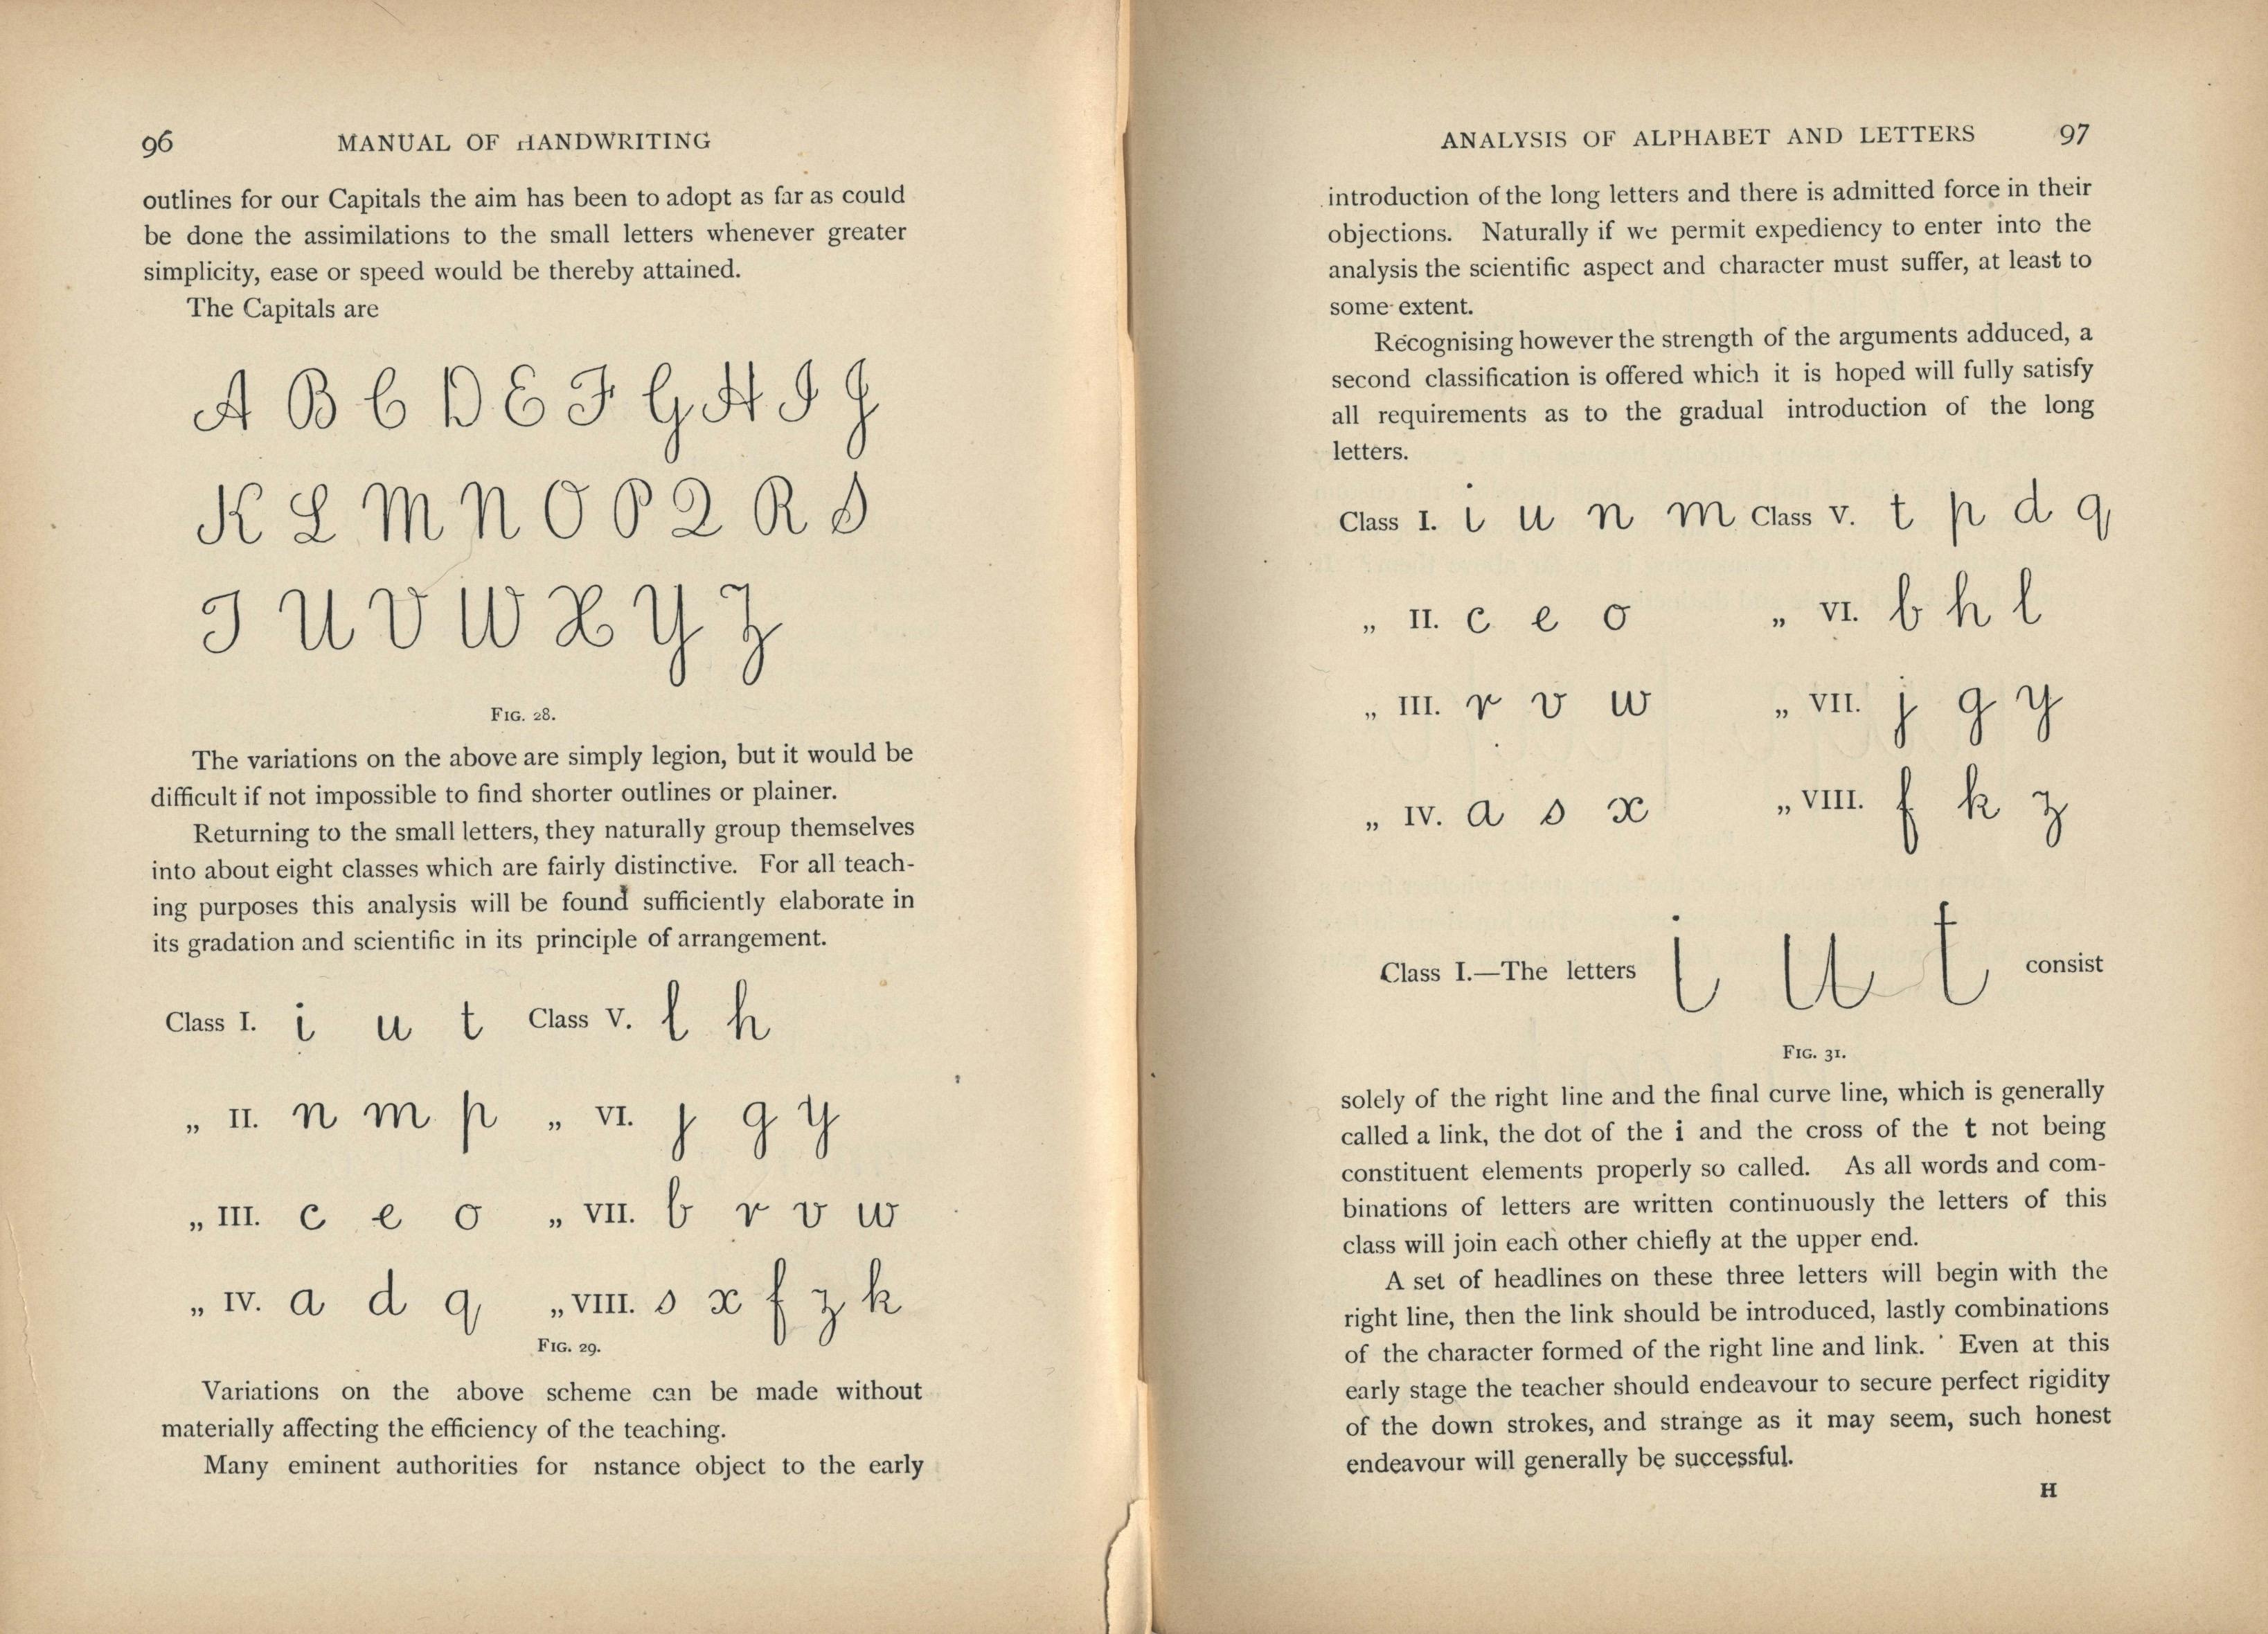  John Jackson, The Theory and Practice of Handwriting